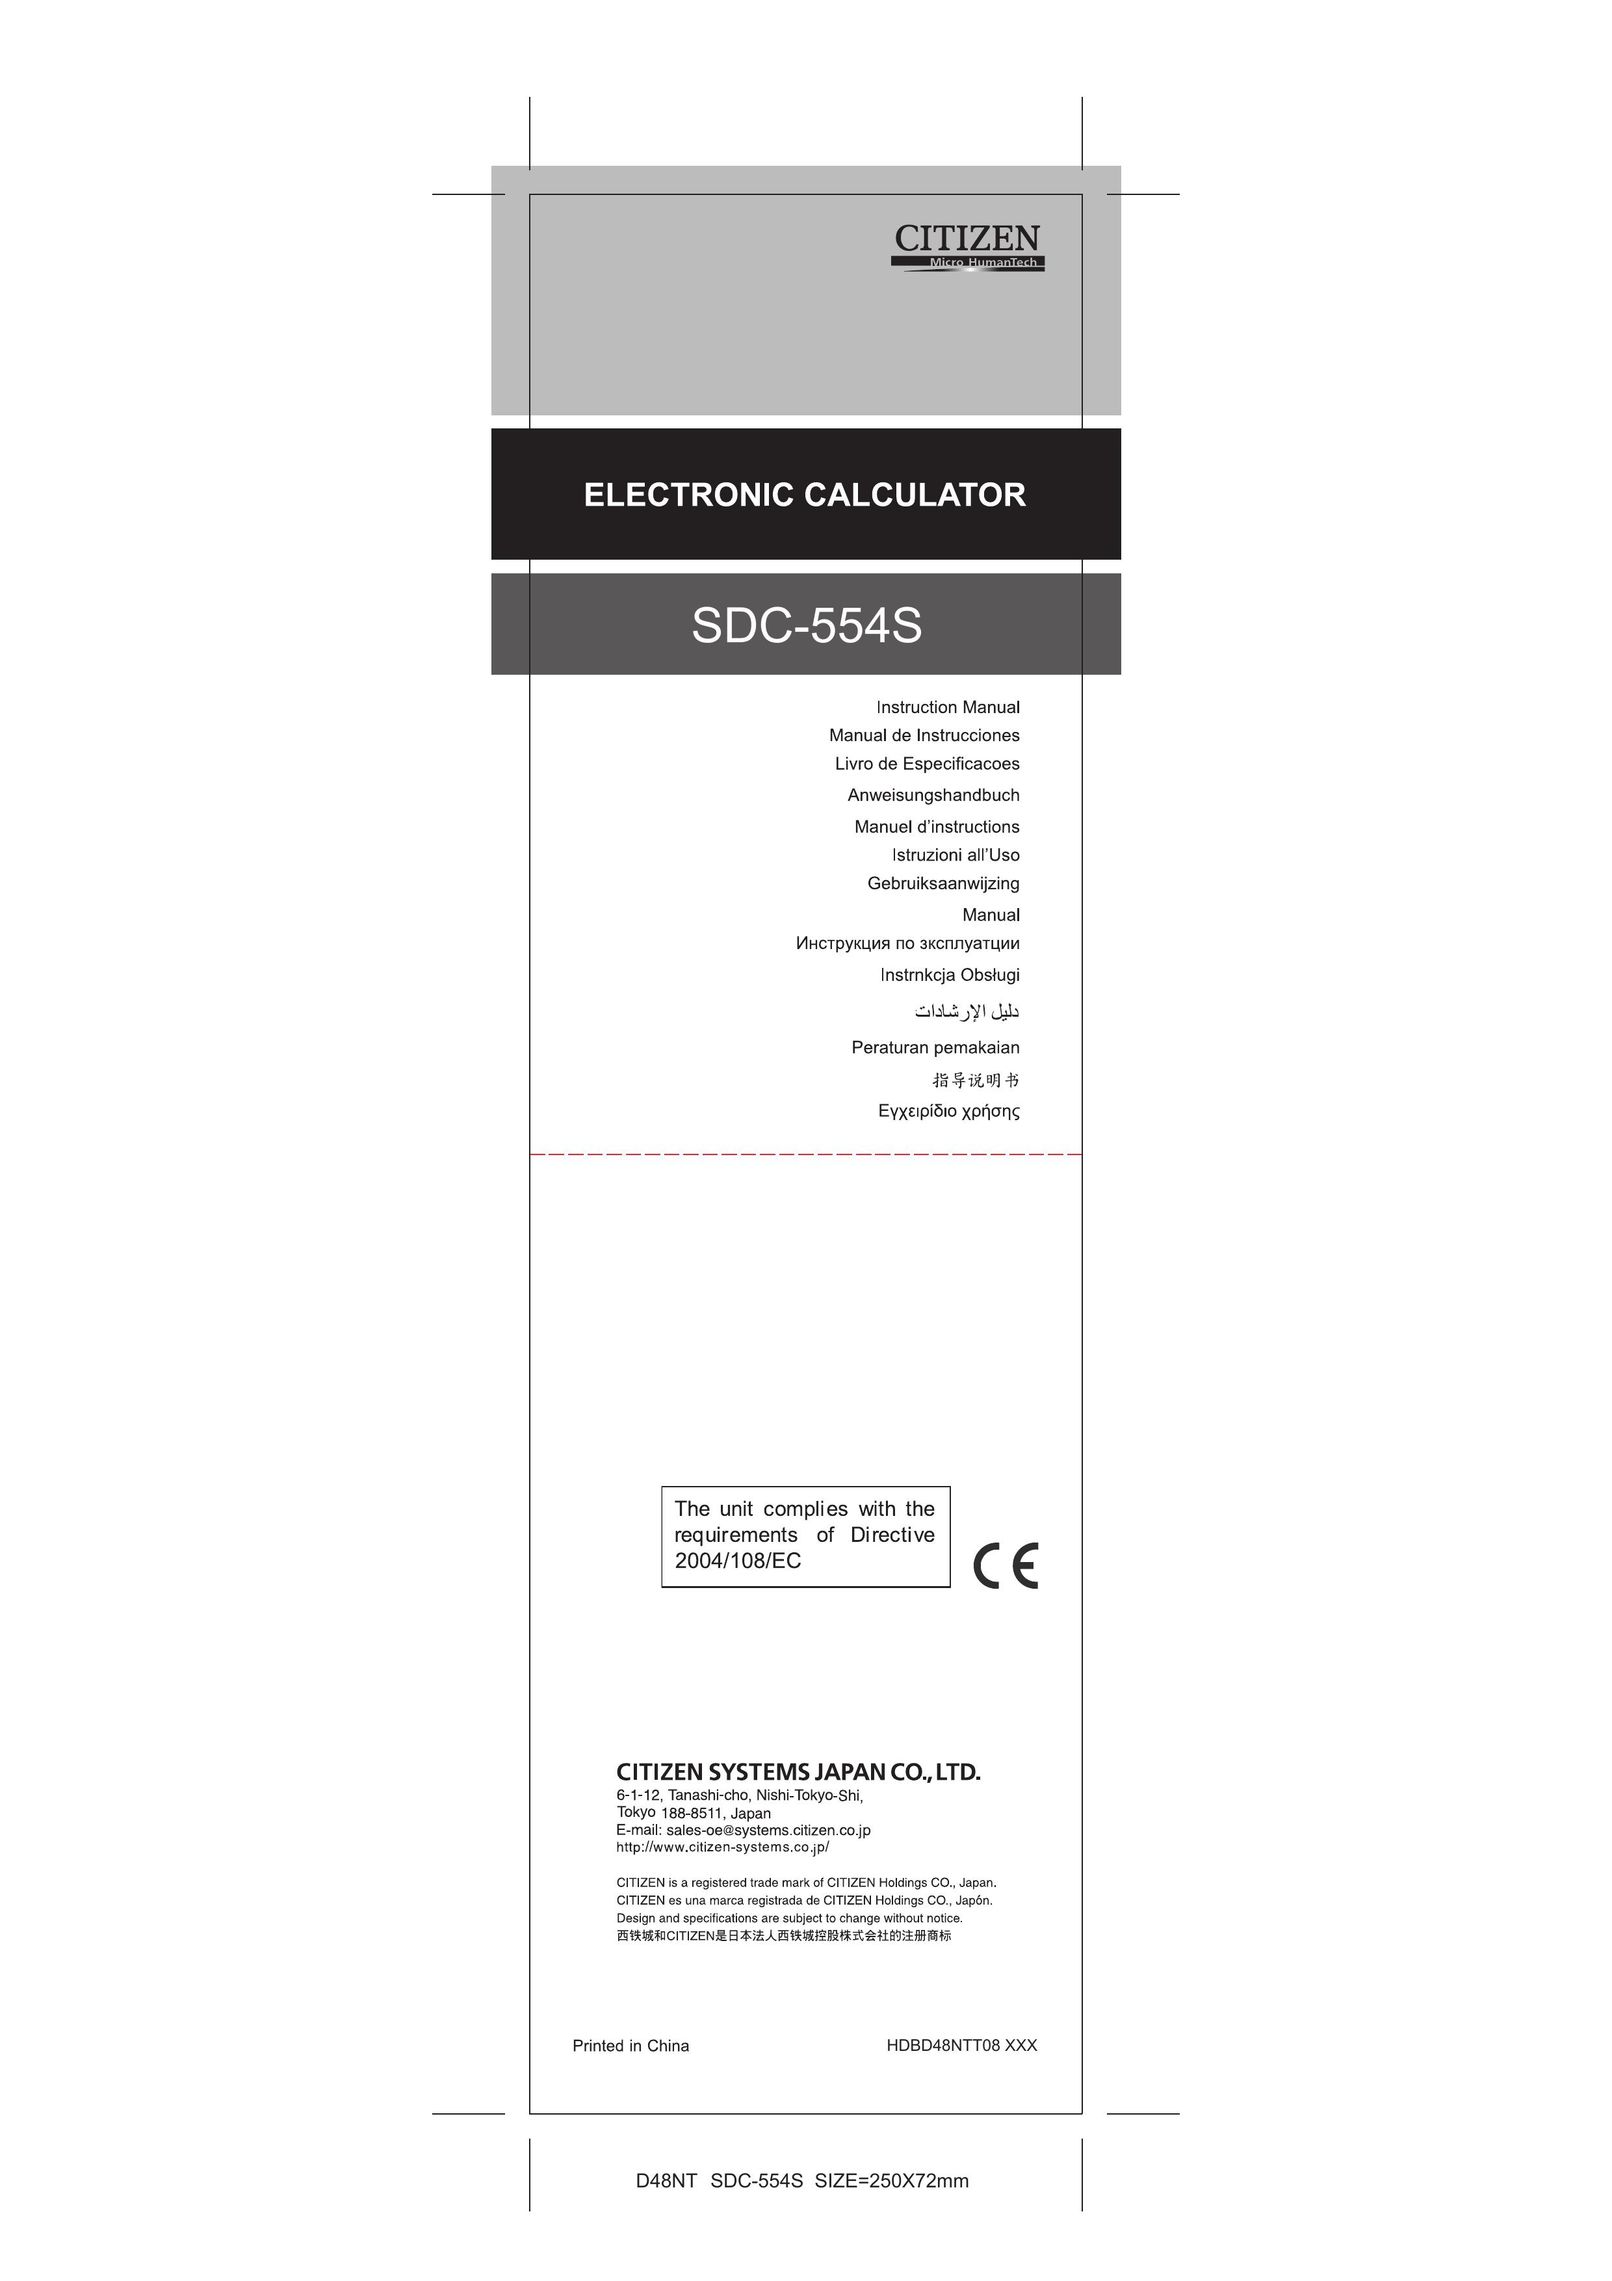 Citizen SDC-554S Calculator User Manual